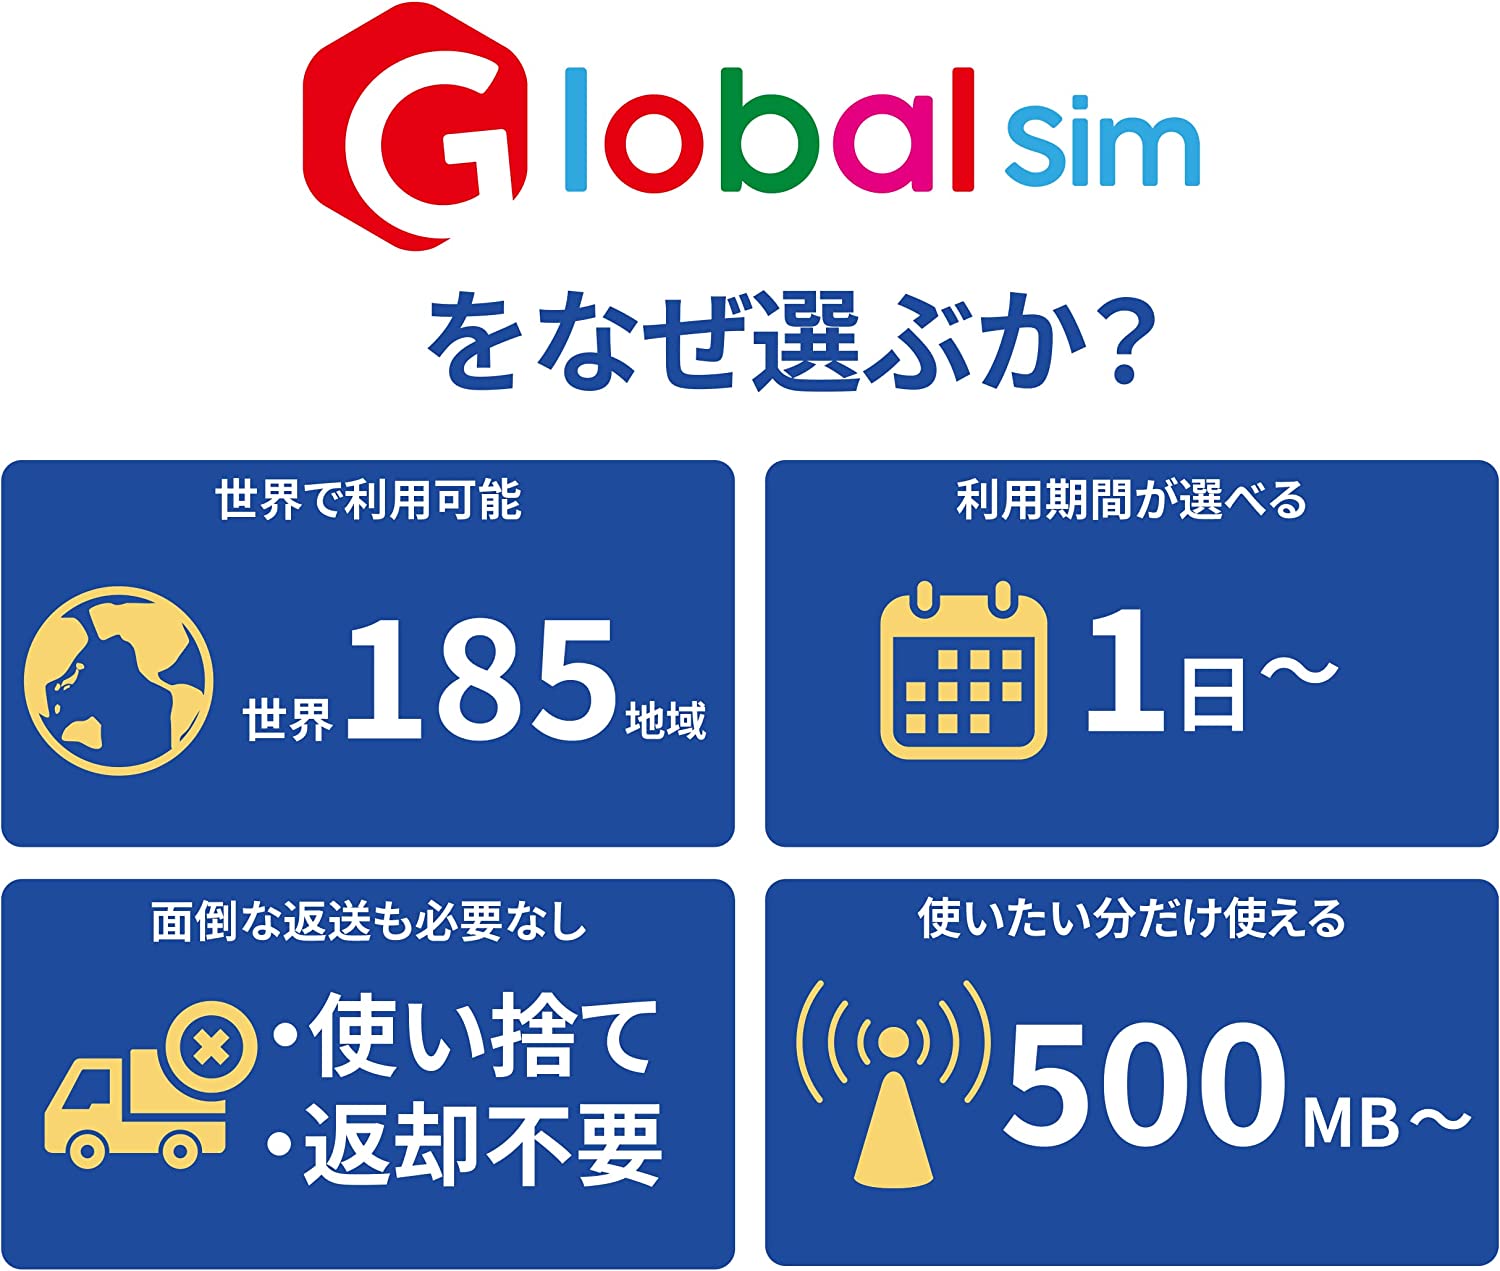 GLOBAL SIM ヨーロッパ 10日間 データ無制限 (2GB 日高速）（容量を使い切っても利用期間内は最大384kbps） データ通信専用 シムフリー端末のみ対応 追加費用なし・契約不要